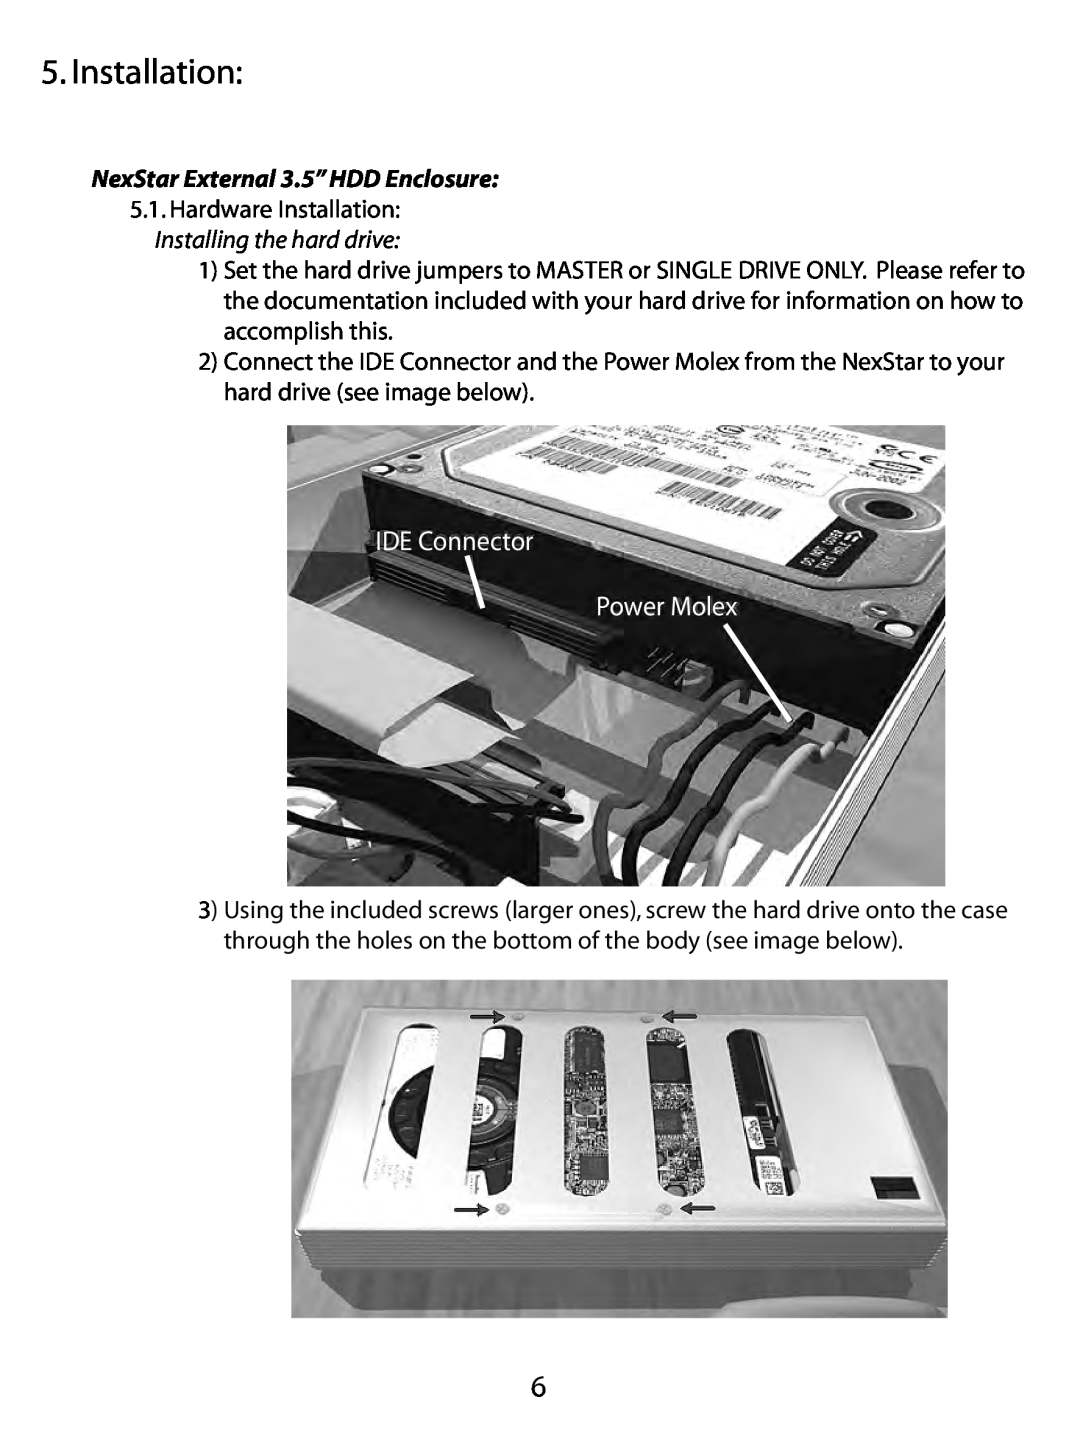 Vantec NST-350UF, NST-350U2 user manual Installation, IDE Connector Power Molex, NexStar External 3.5” HDD Enclosure 